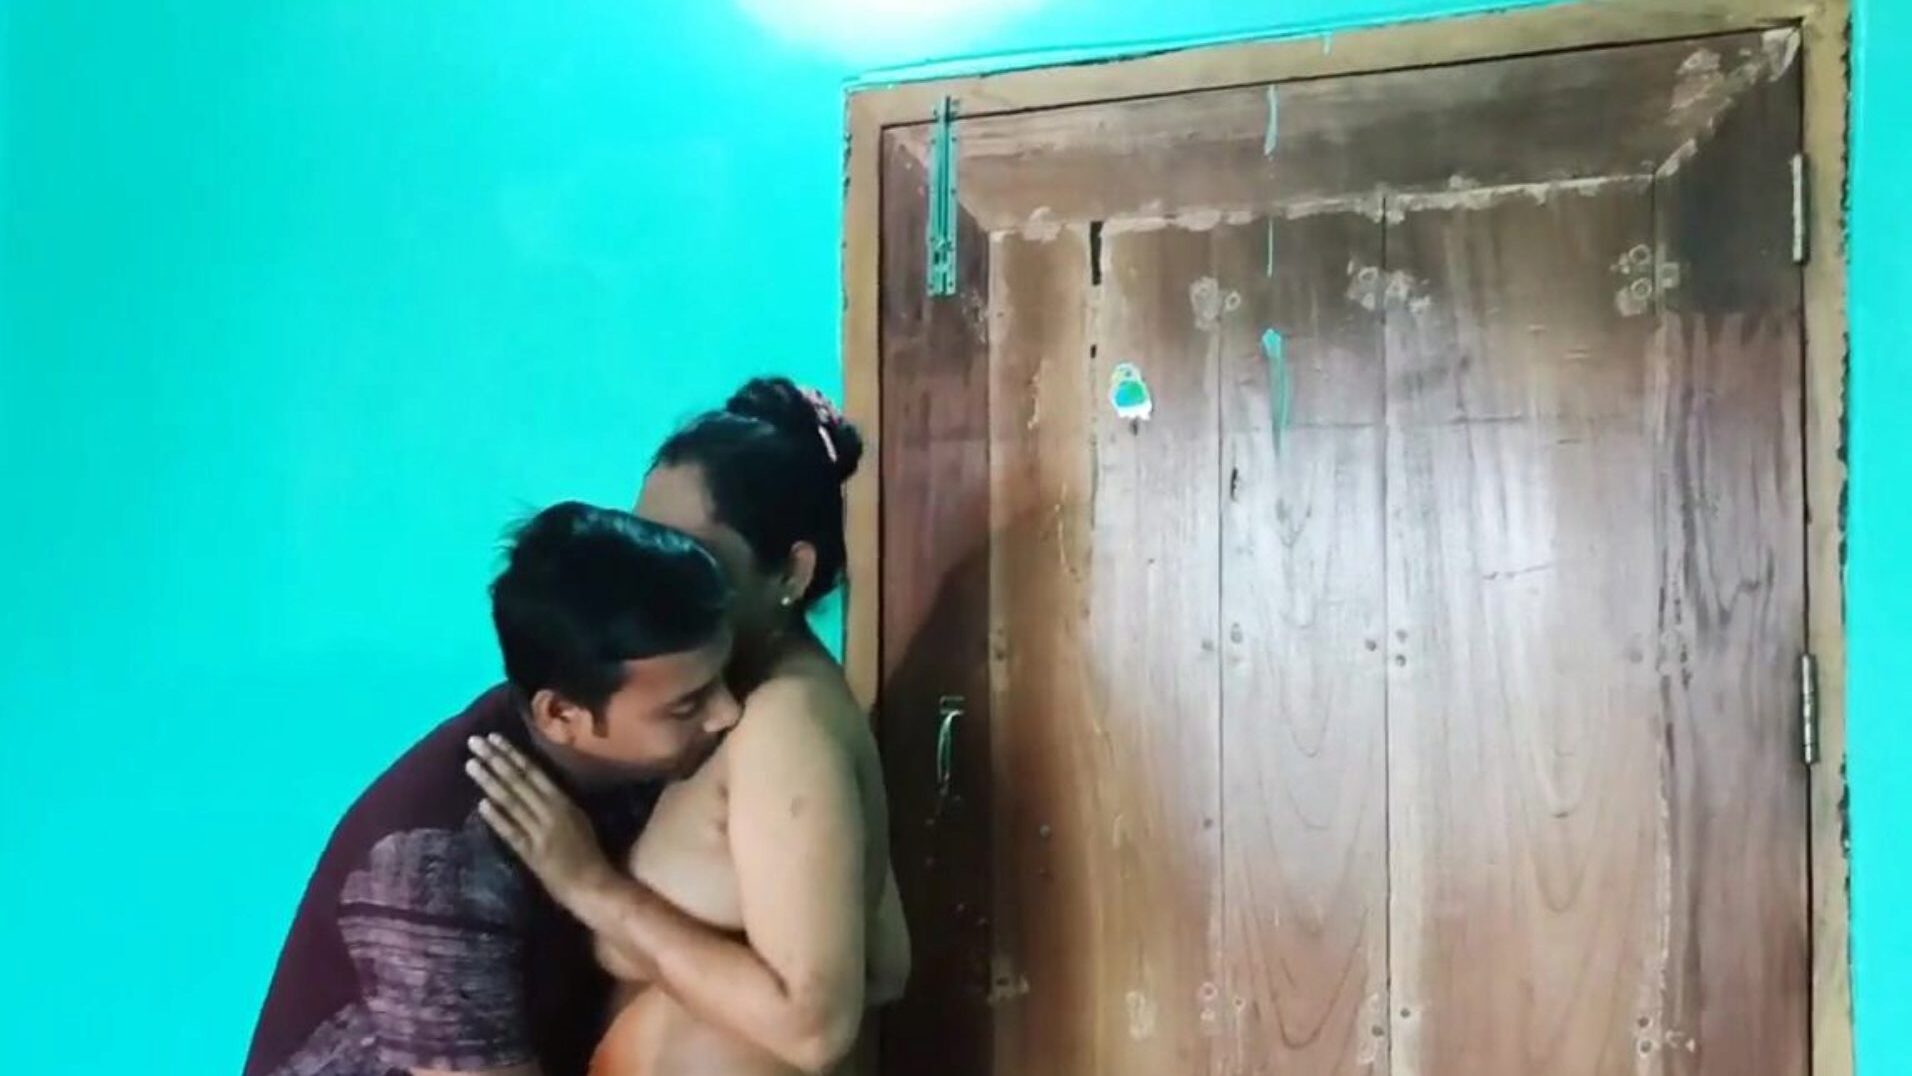 desi bengali σεξ βίντεο γυμνό, δωρεάν ασιατικό πορνό 6c: xhamster παρακολουθήστε desi bengali σεξ βίντεο γυμνή ταινία στο xhamster, η παχύτερη ιστοσελίδα σωλήνα σύνδεσης με hd με τόνους δωρεάν ασιατικές xxn σεξ και πρωκτικές ταινίες πορνό